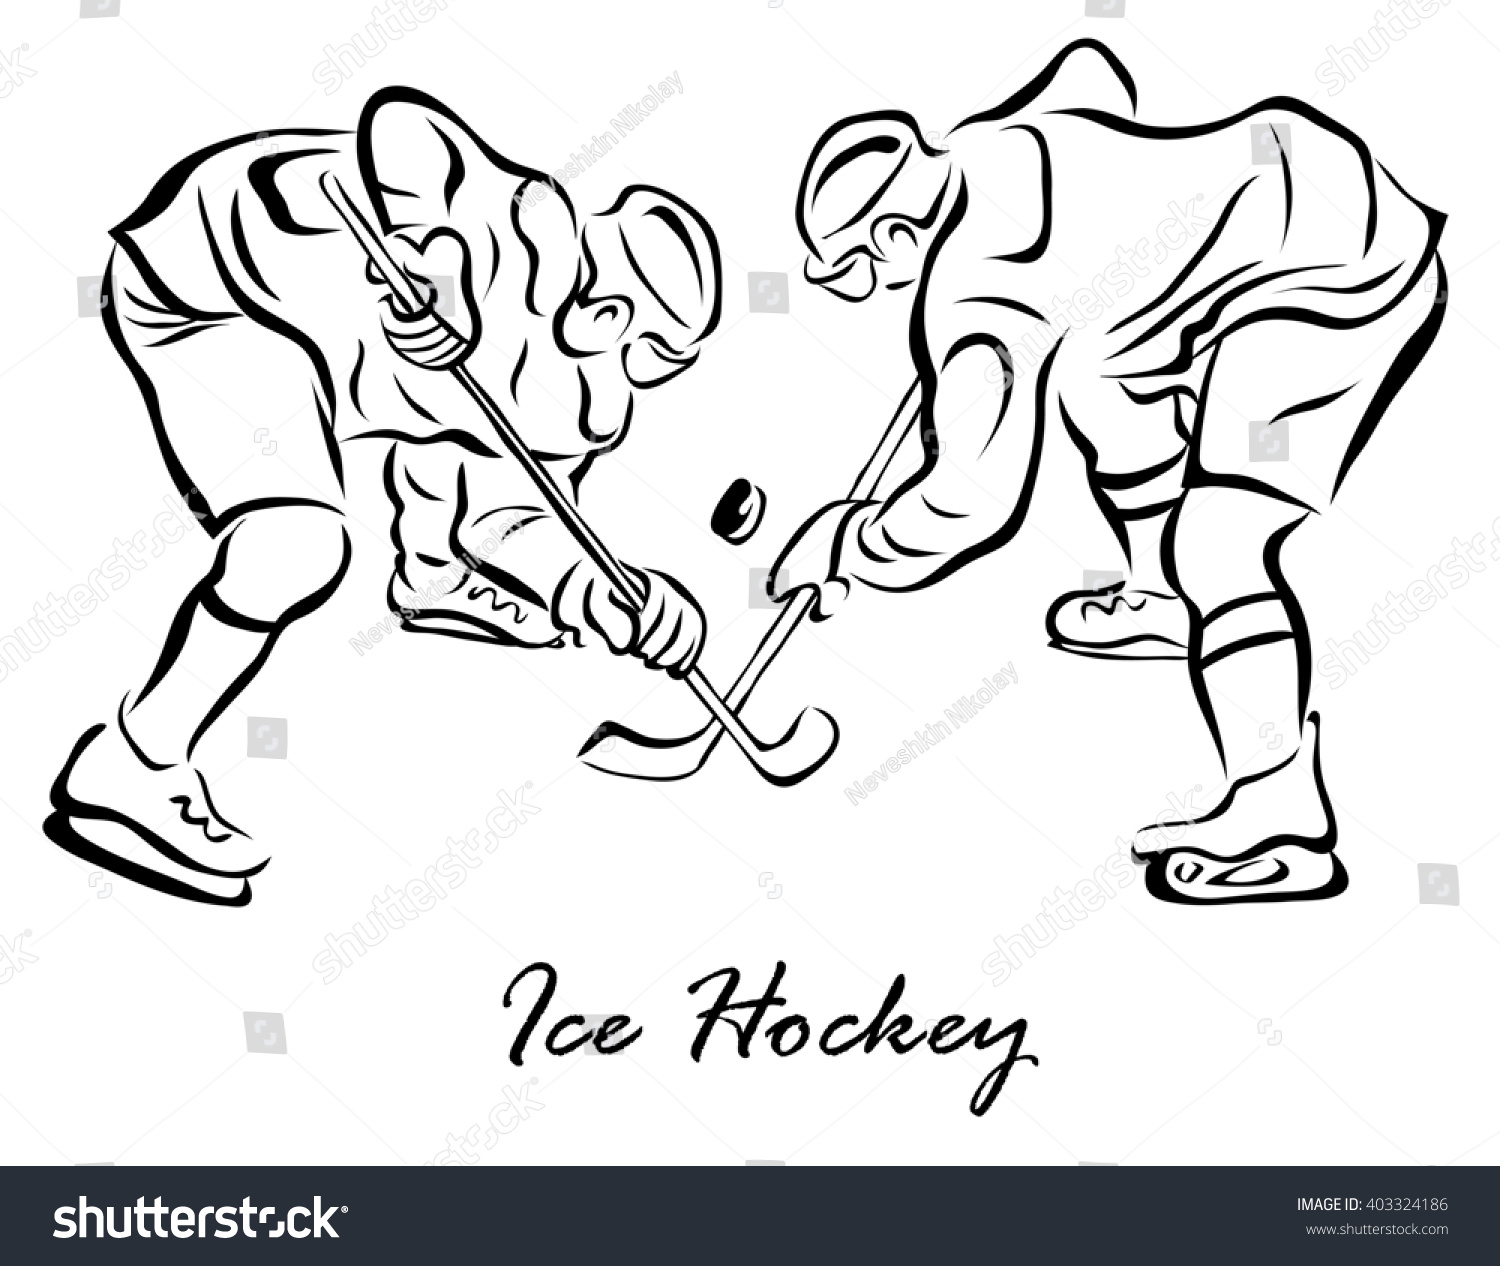 hockey clipart face off